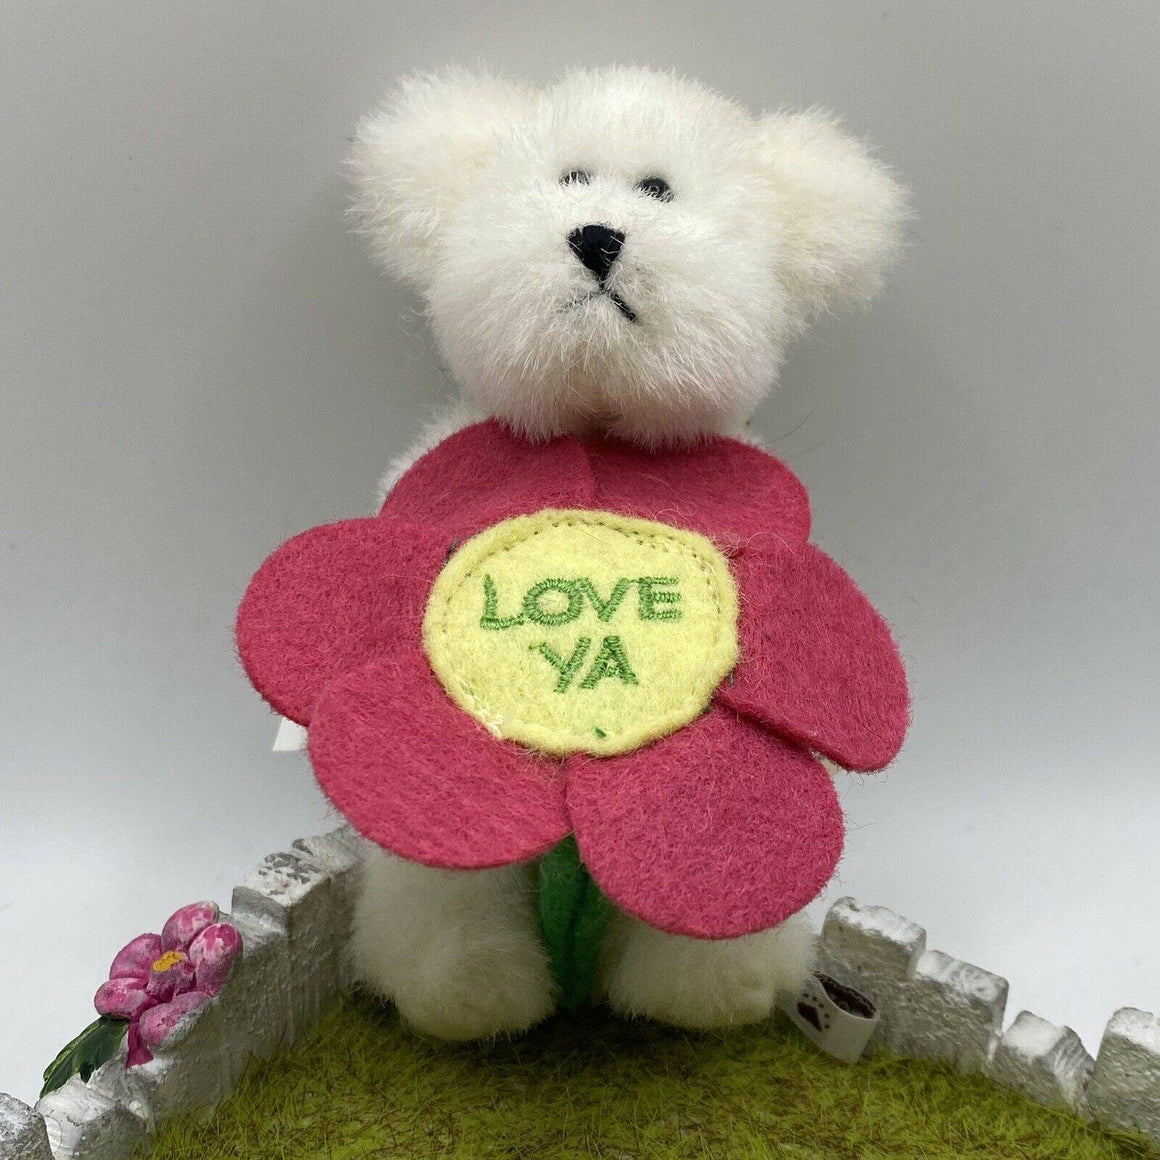 Love Ya-Boyds Mini Message Bears #567206-1